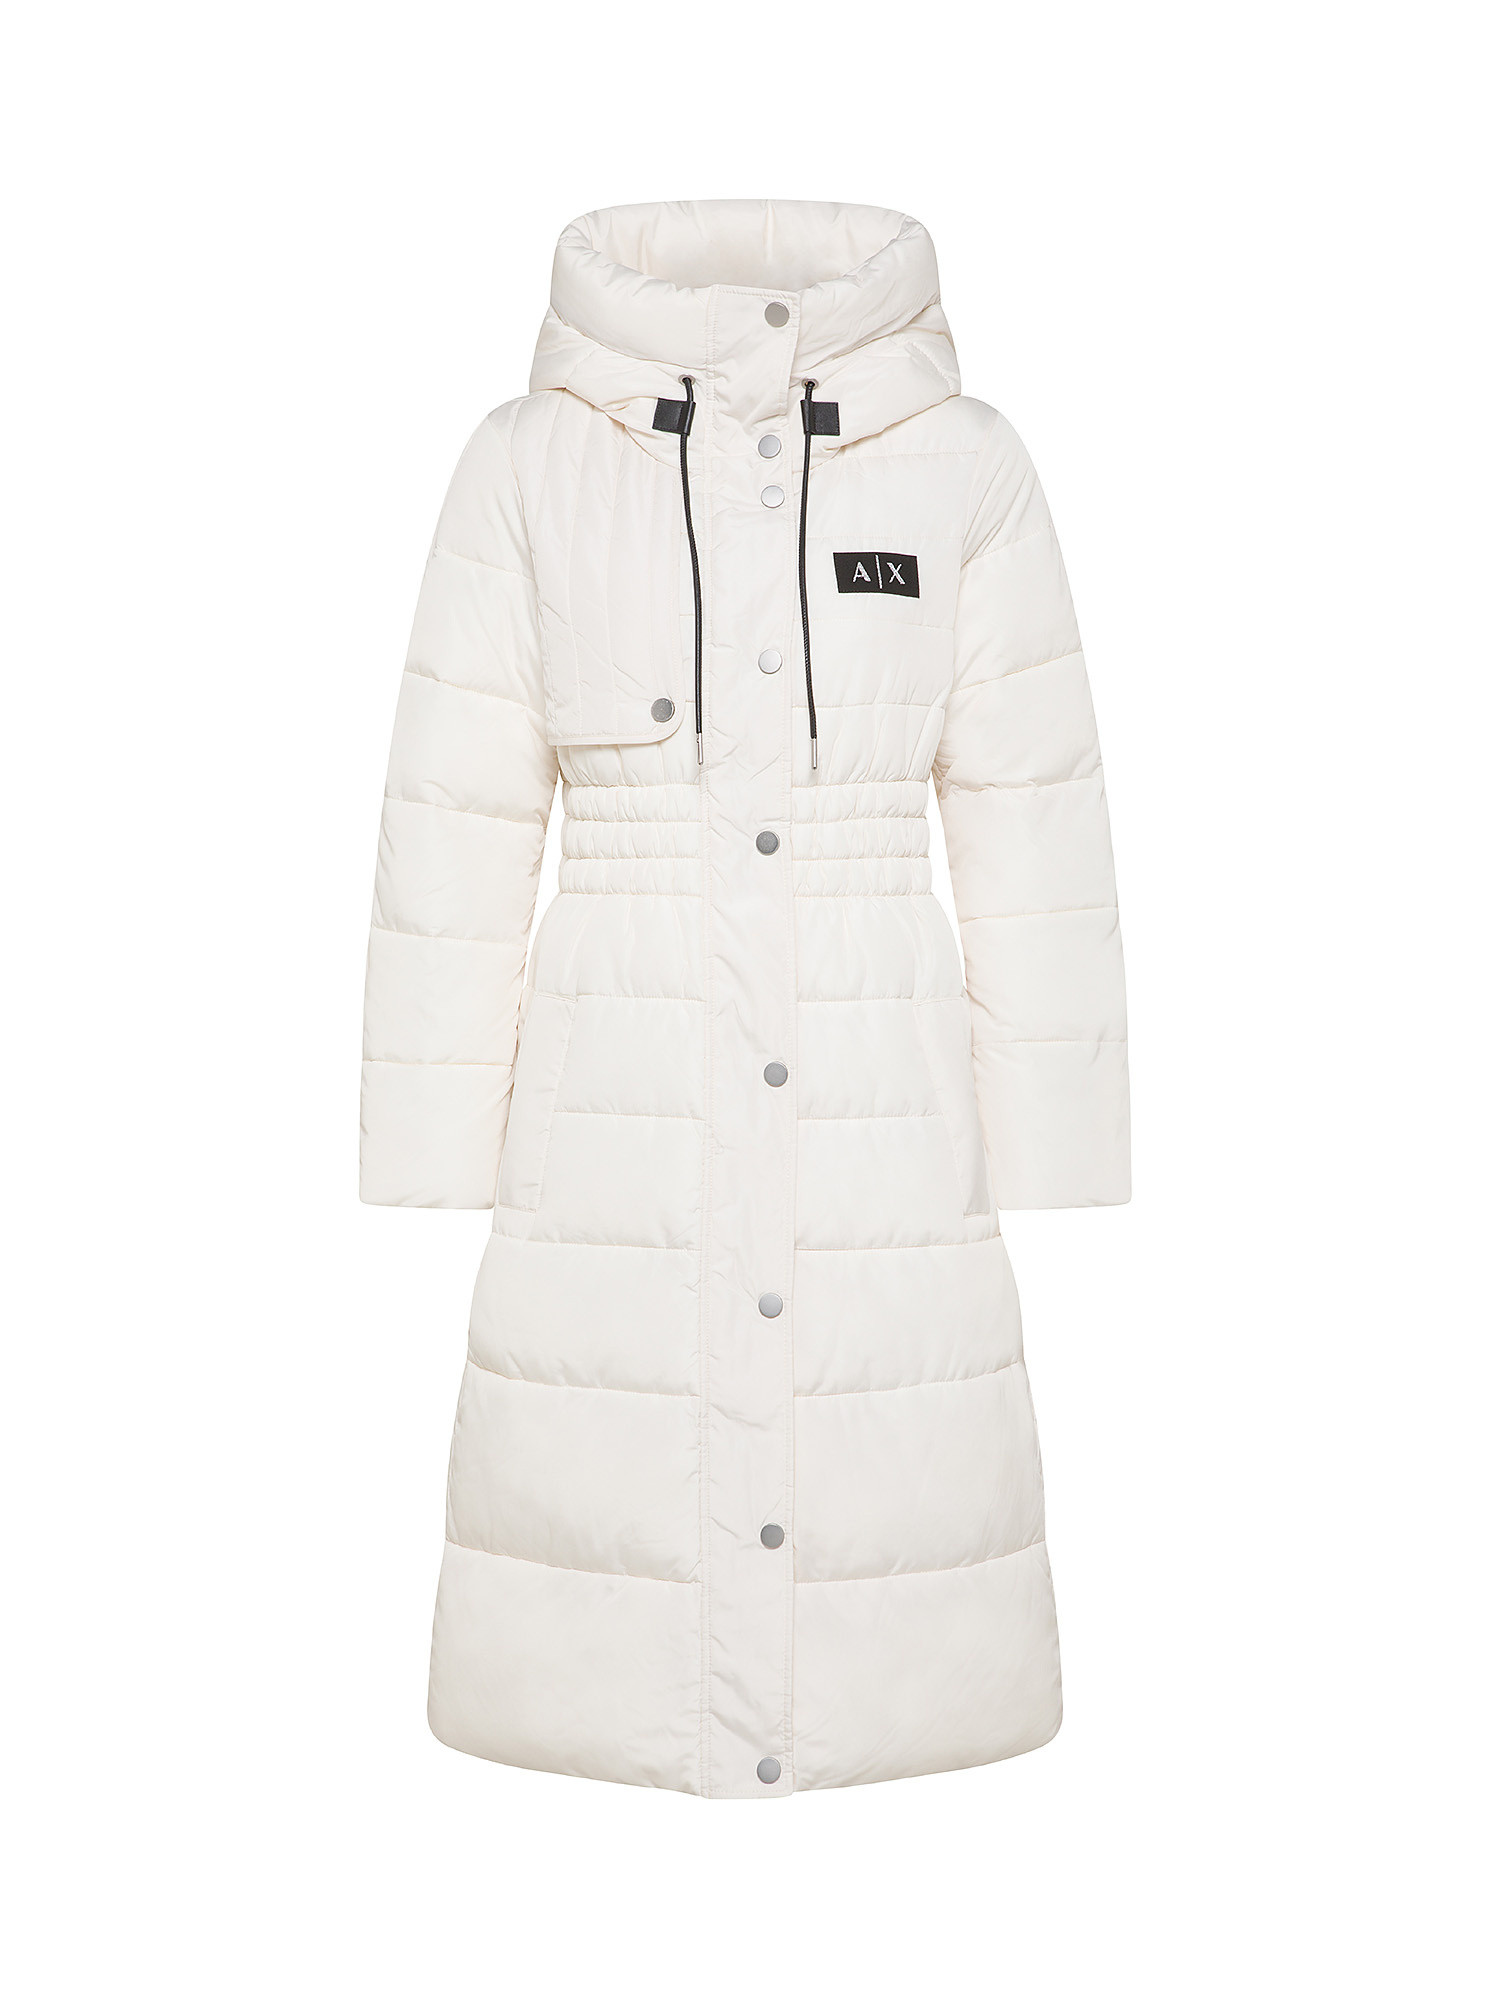 Armani Exchange - Padded down jacket with hood, White, large image number 0